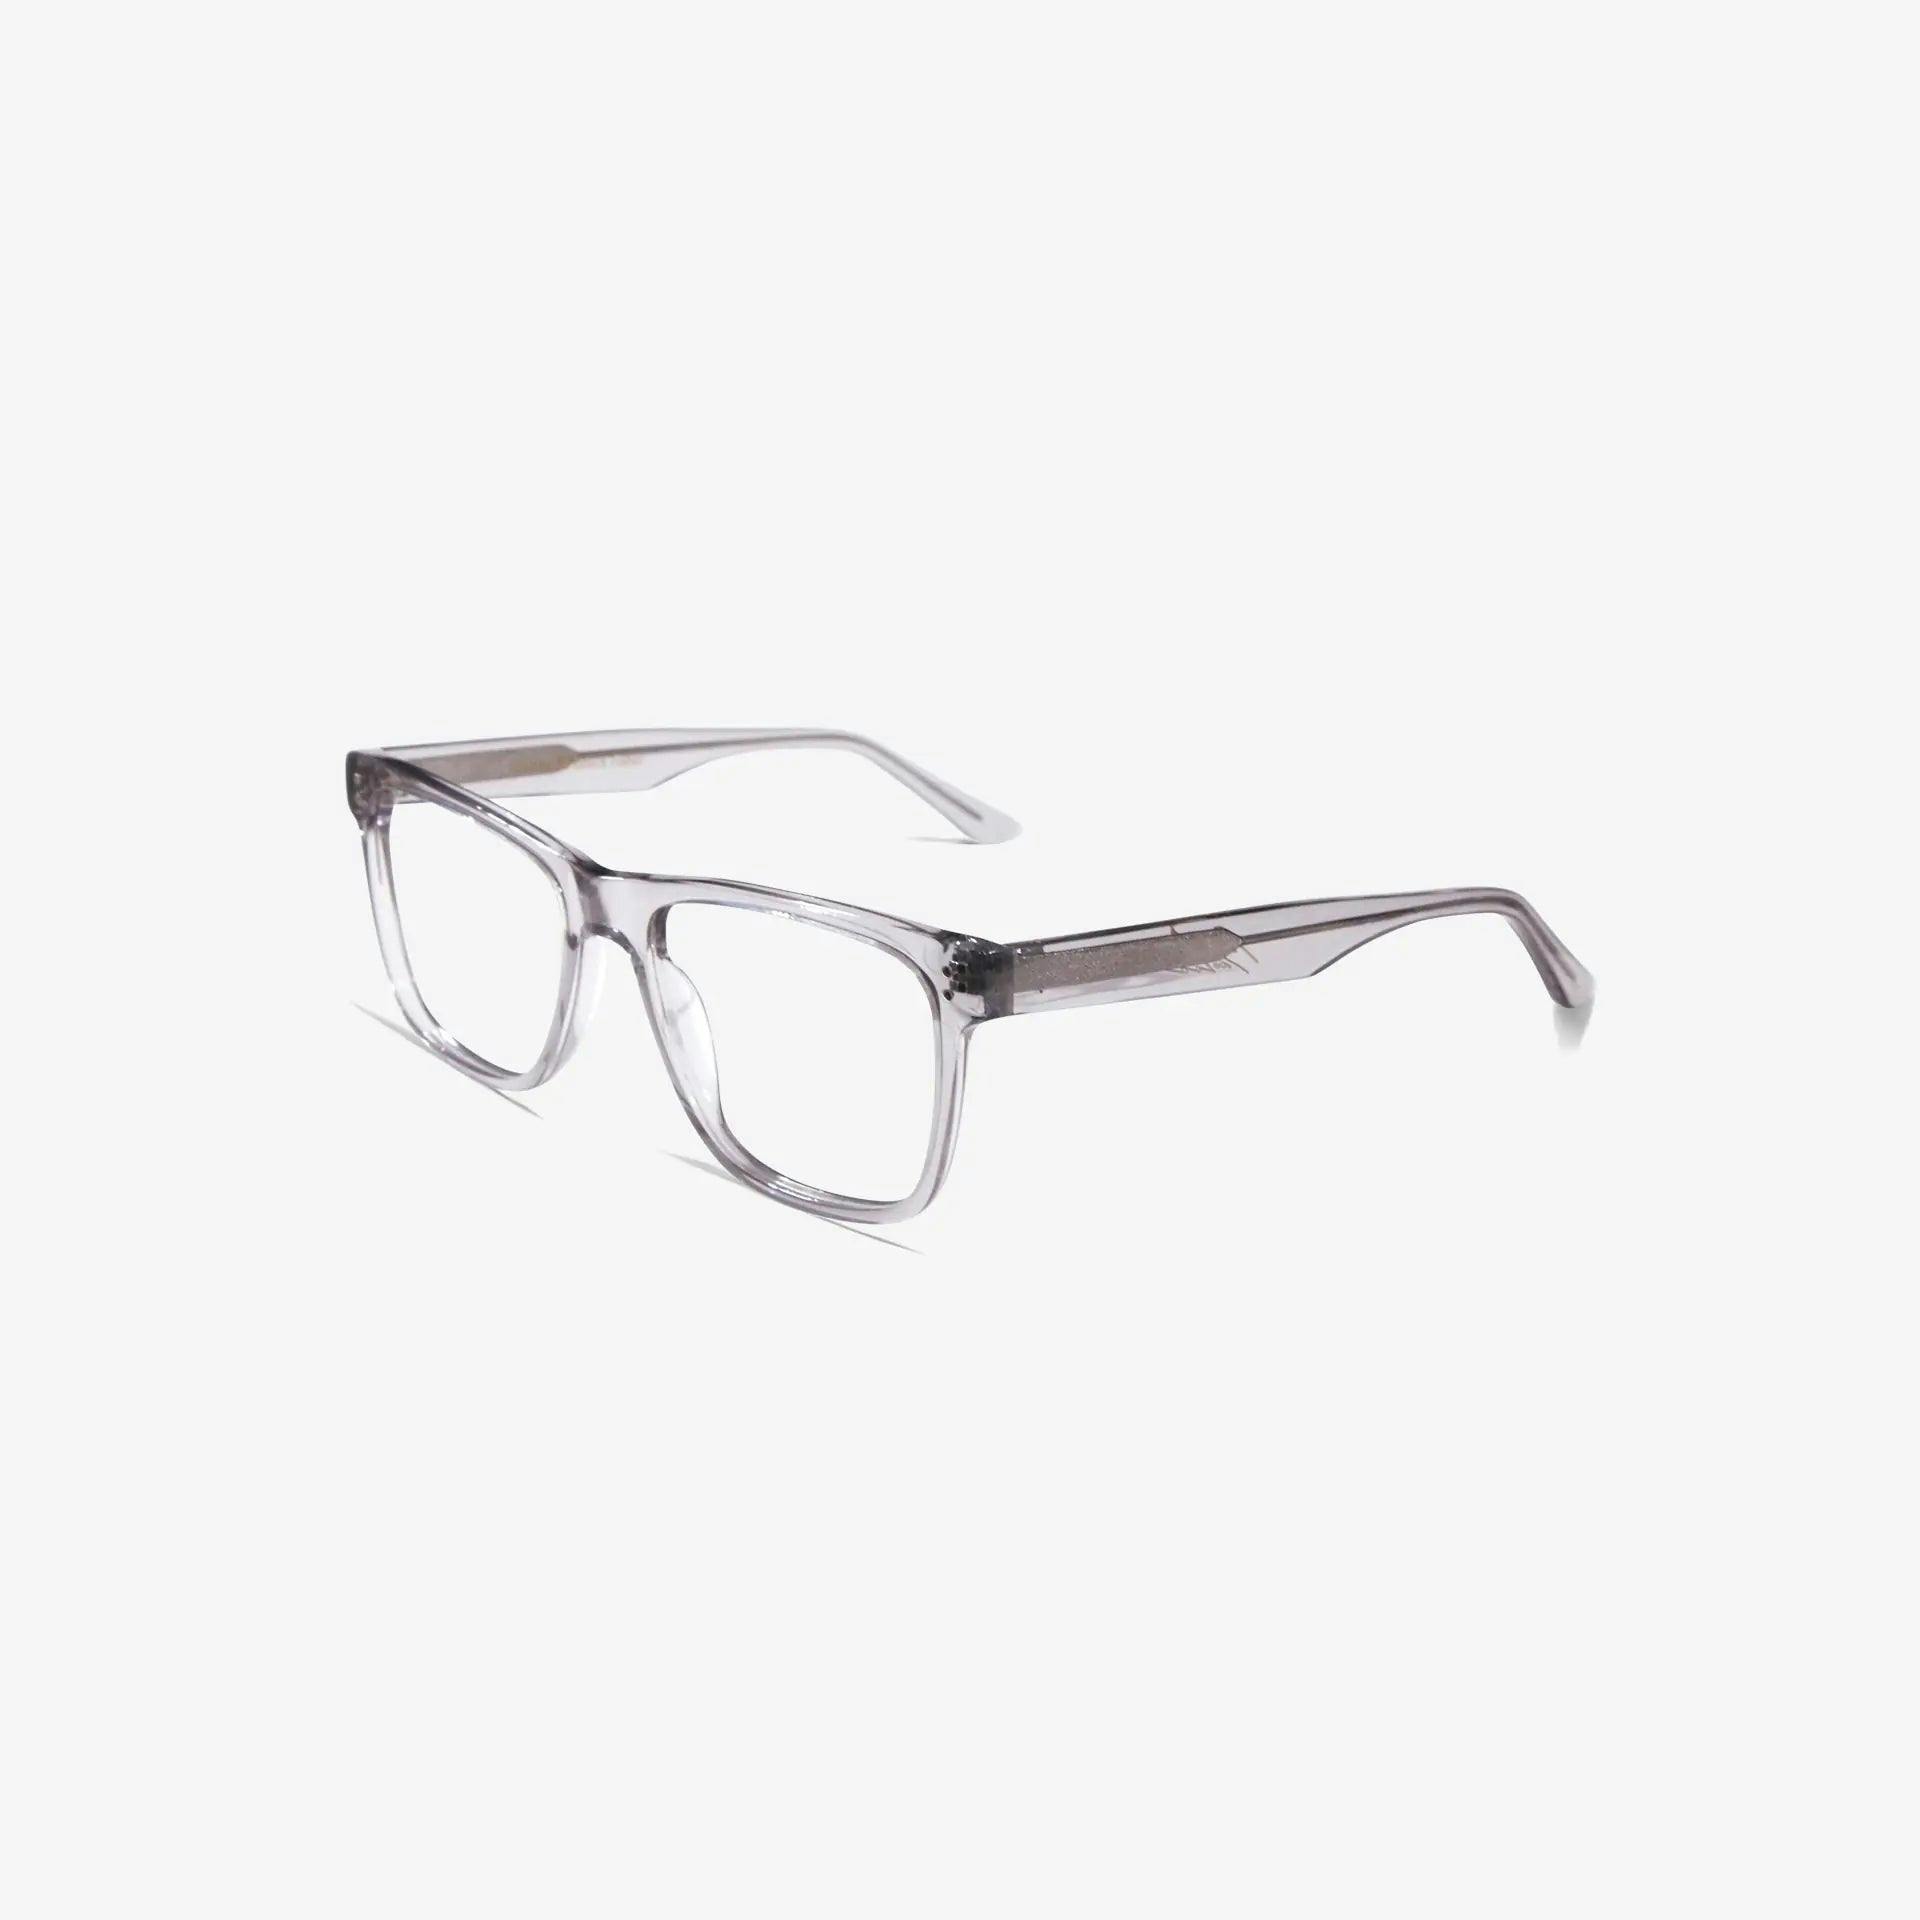 Huxley glasses | Fabes Slate 